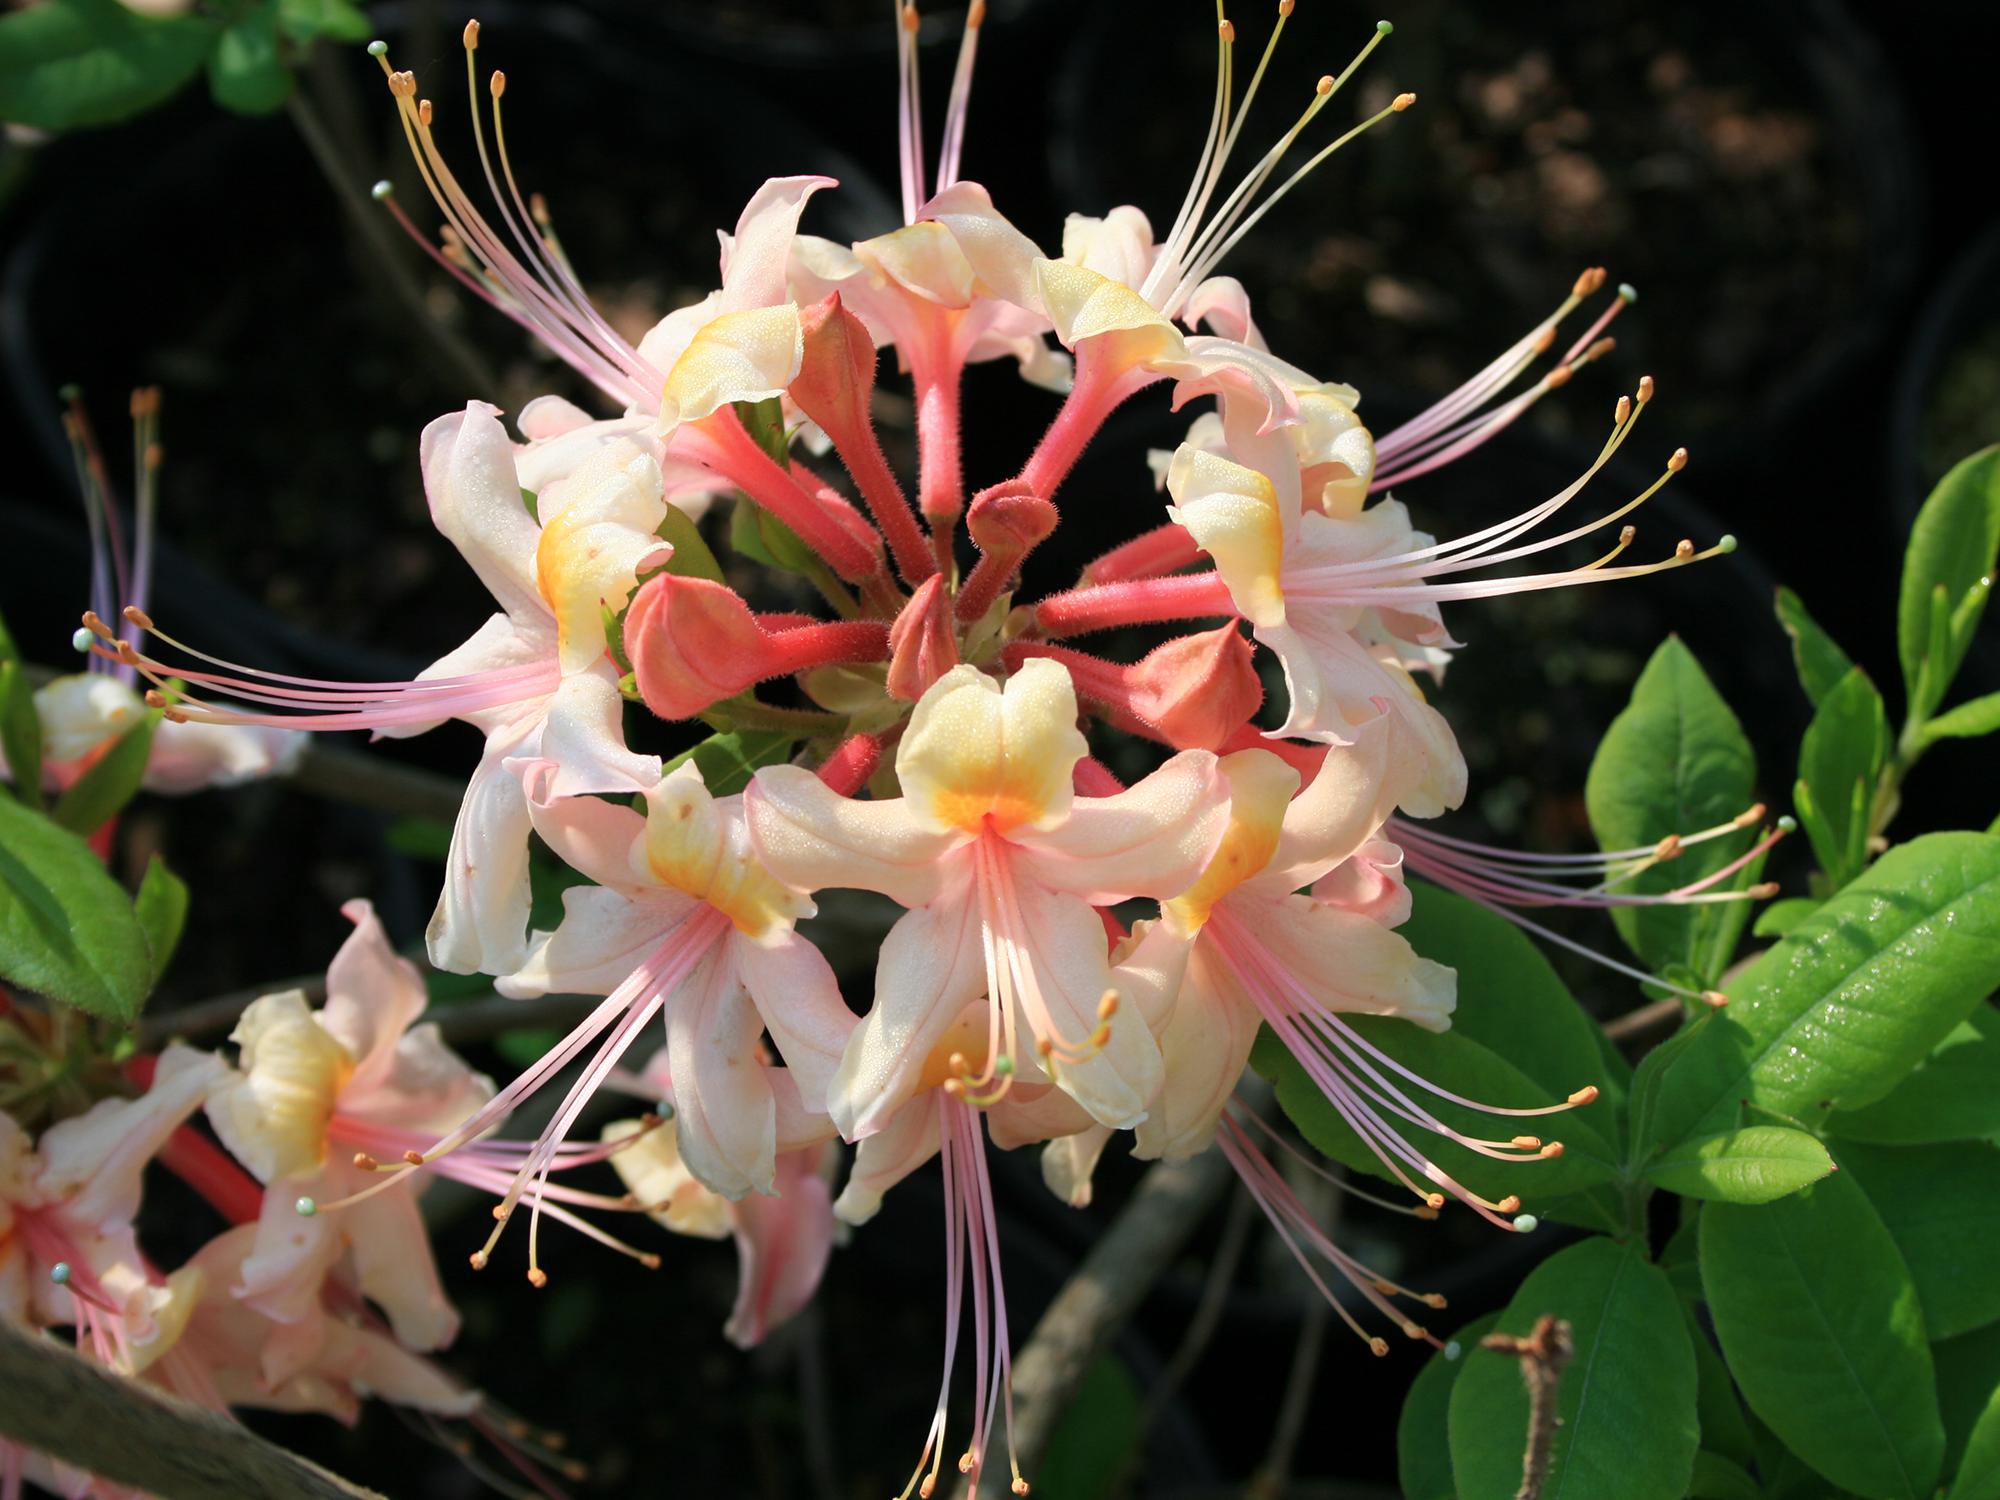 The flowers of the native azalea piedmont, or honeysuckle azalea, are very fragrant and pleasant on a calm, early-morning garden stroll. (Photo by MSU Extension/Gary Bachman)